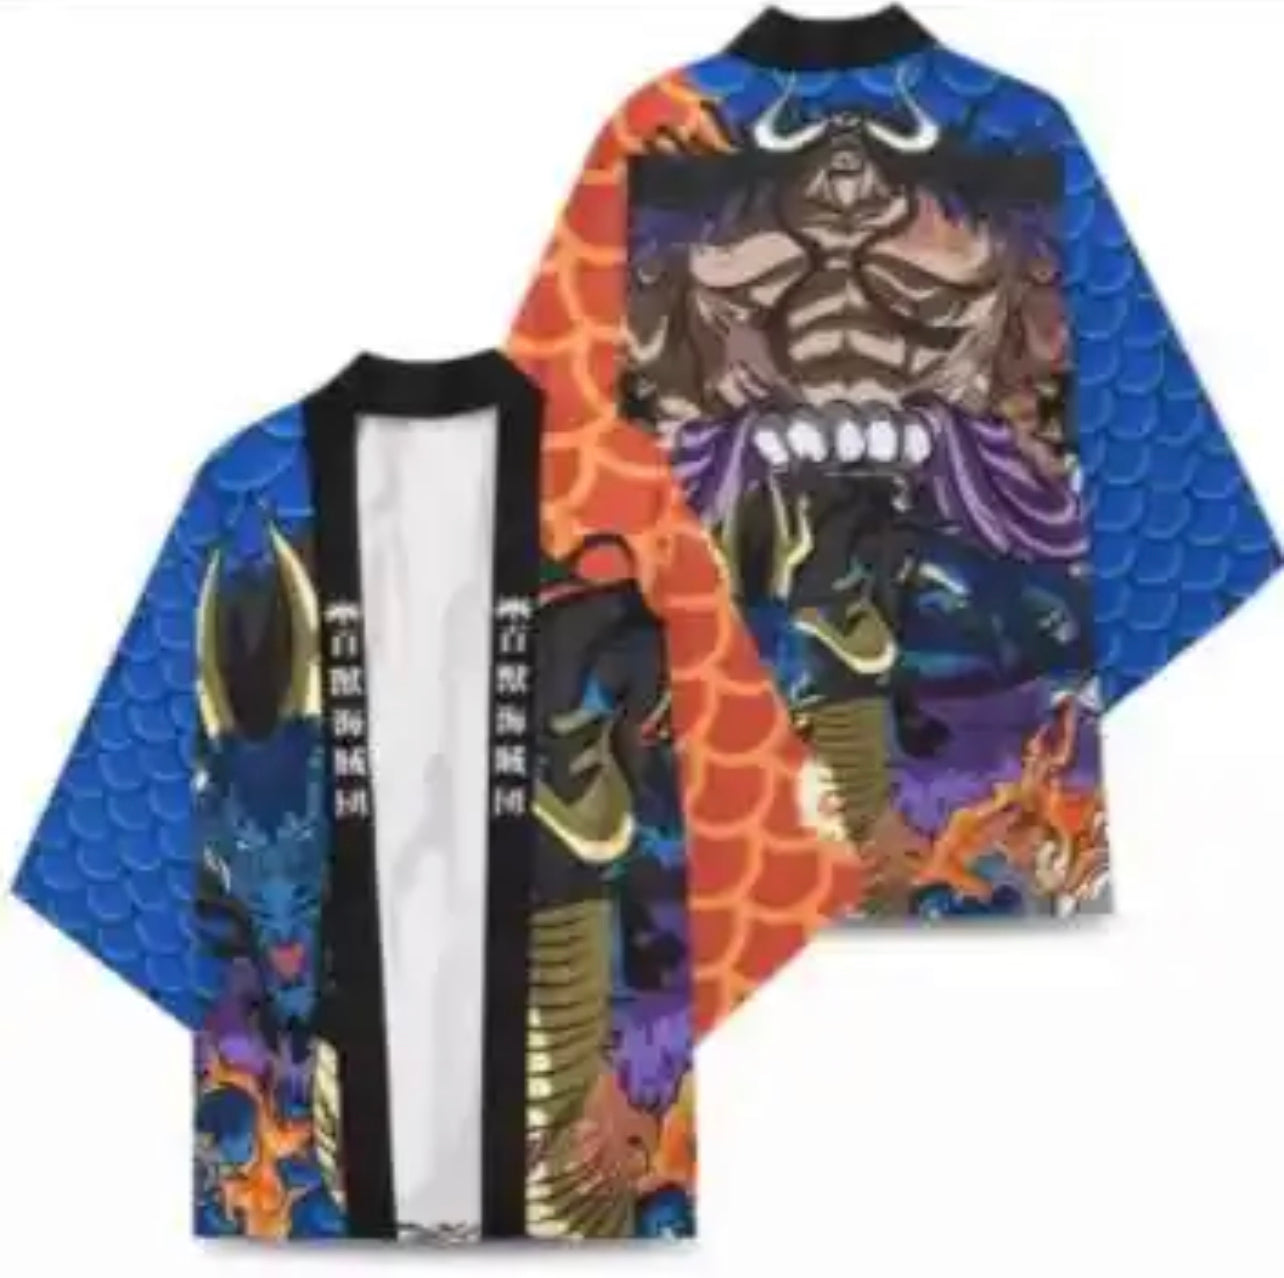 “Kaido” Beast Pirate King - One piece Kimono